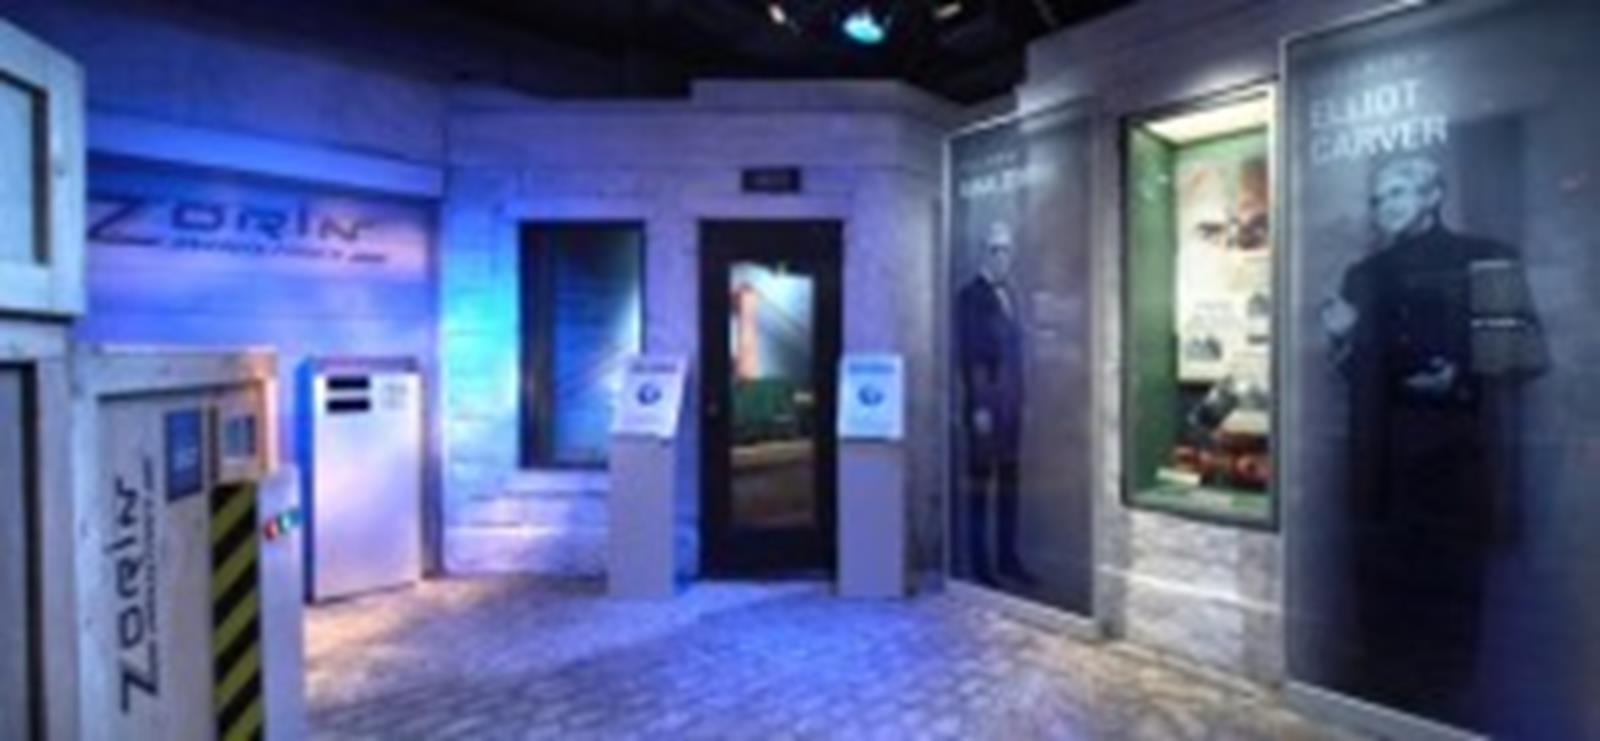 Part of the New James Bond Exhibit. International Spy Museum